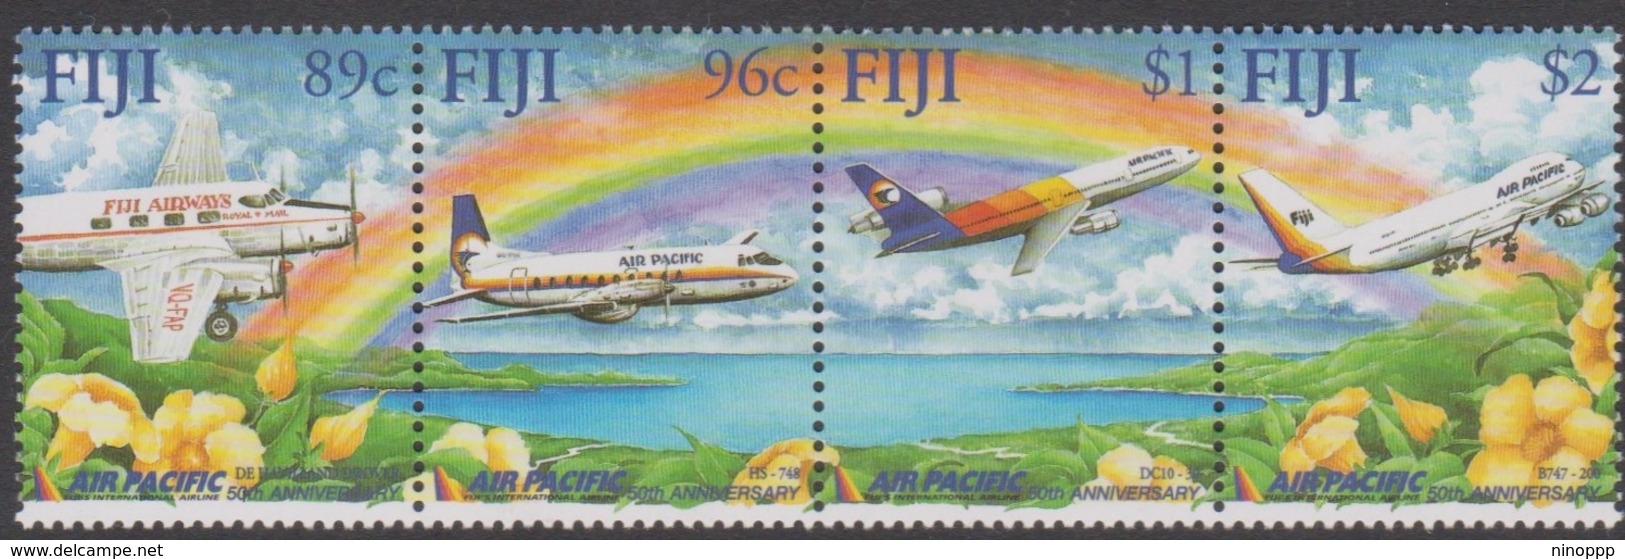 Fiji SG 1149-1152 2001 Air Pacific, Mint Never Hinged - Fiji (1970-...)